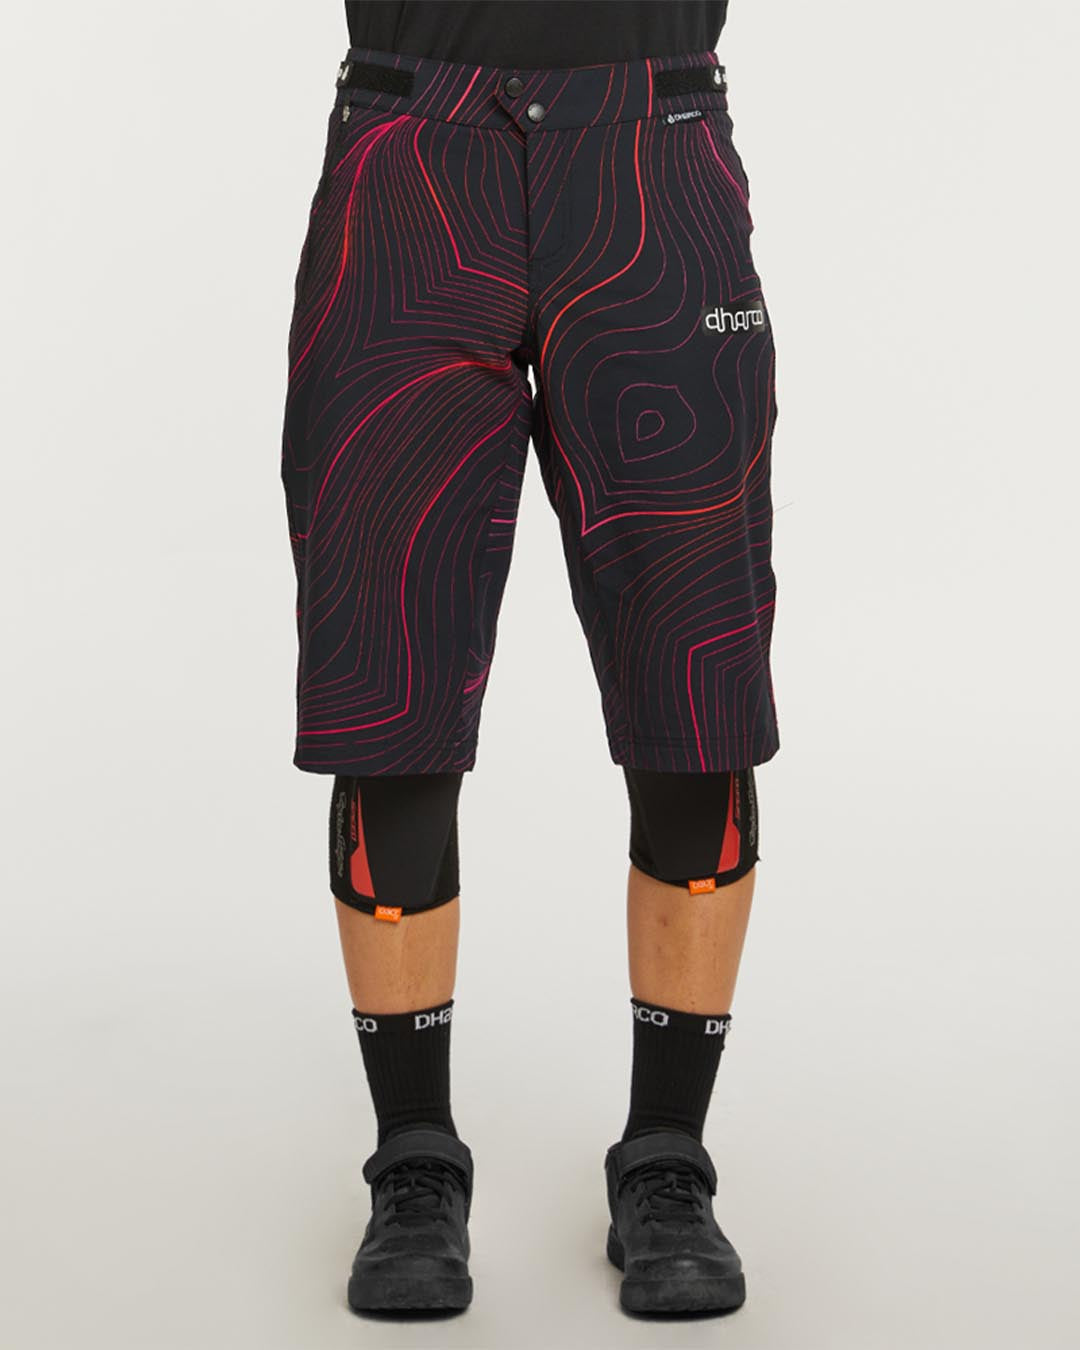 Womens MTB Gravity Shorts - Black | DHaRCO - DHaRCO Clothing